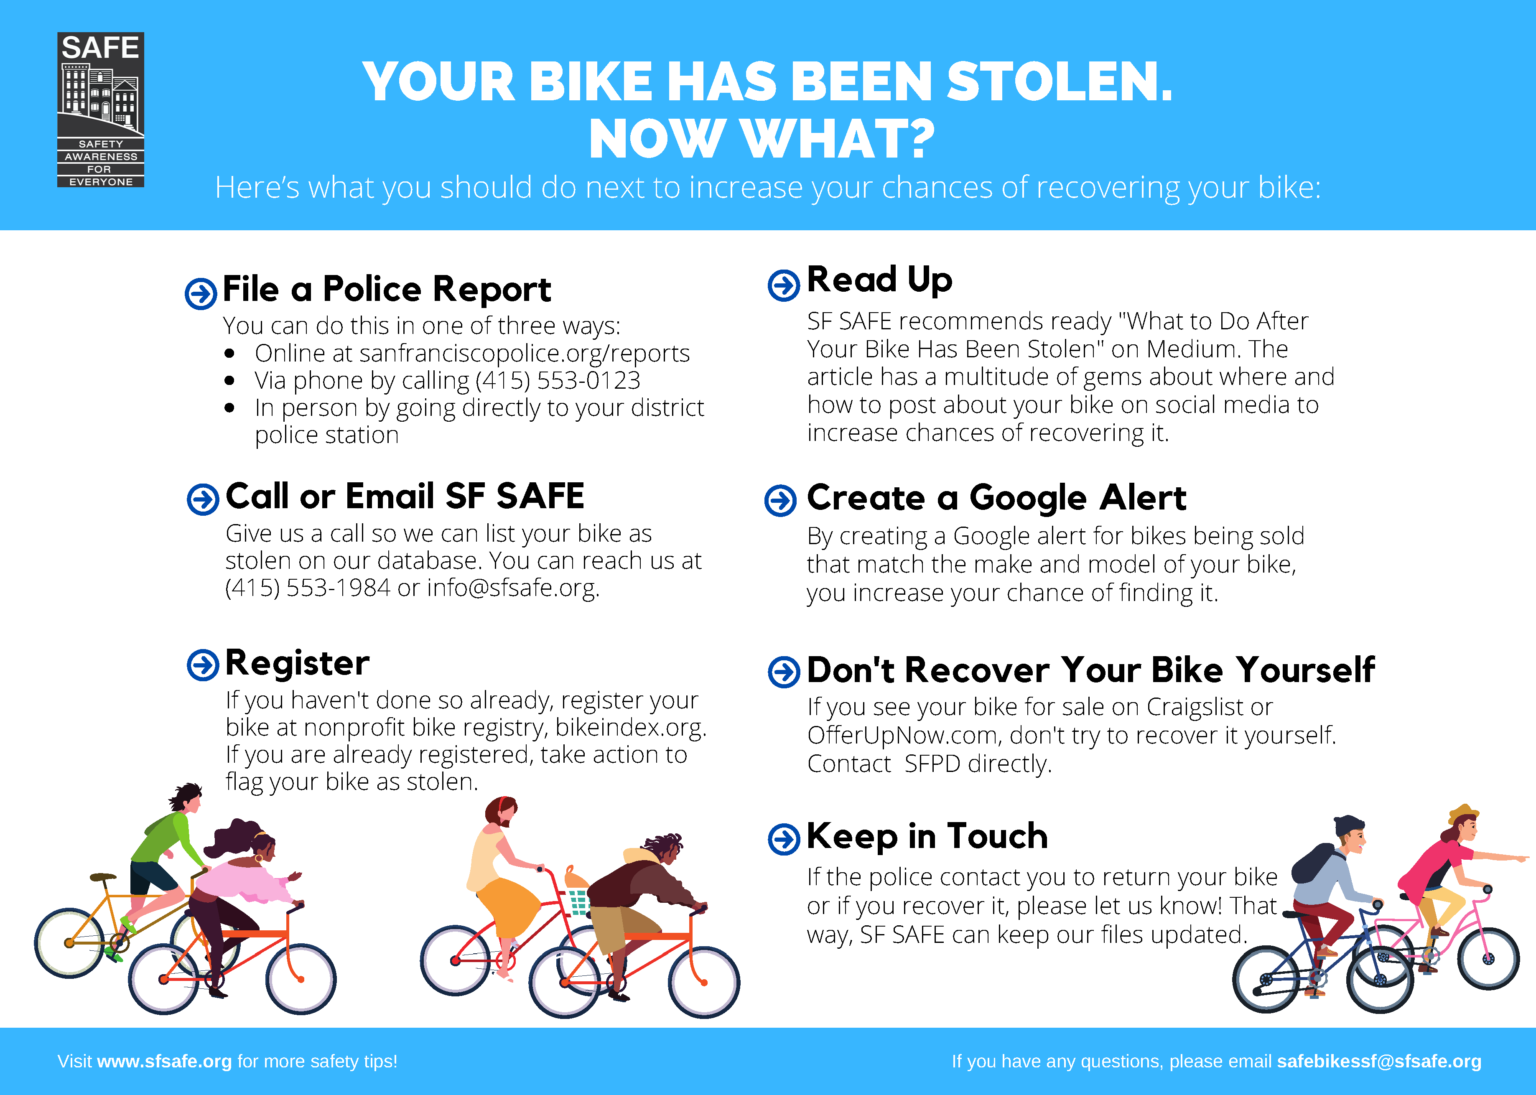 Bike was stolen. Being a Bike игра. Recover Bike. Stolen your Bike. This bike is mine